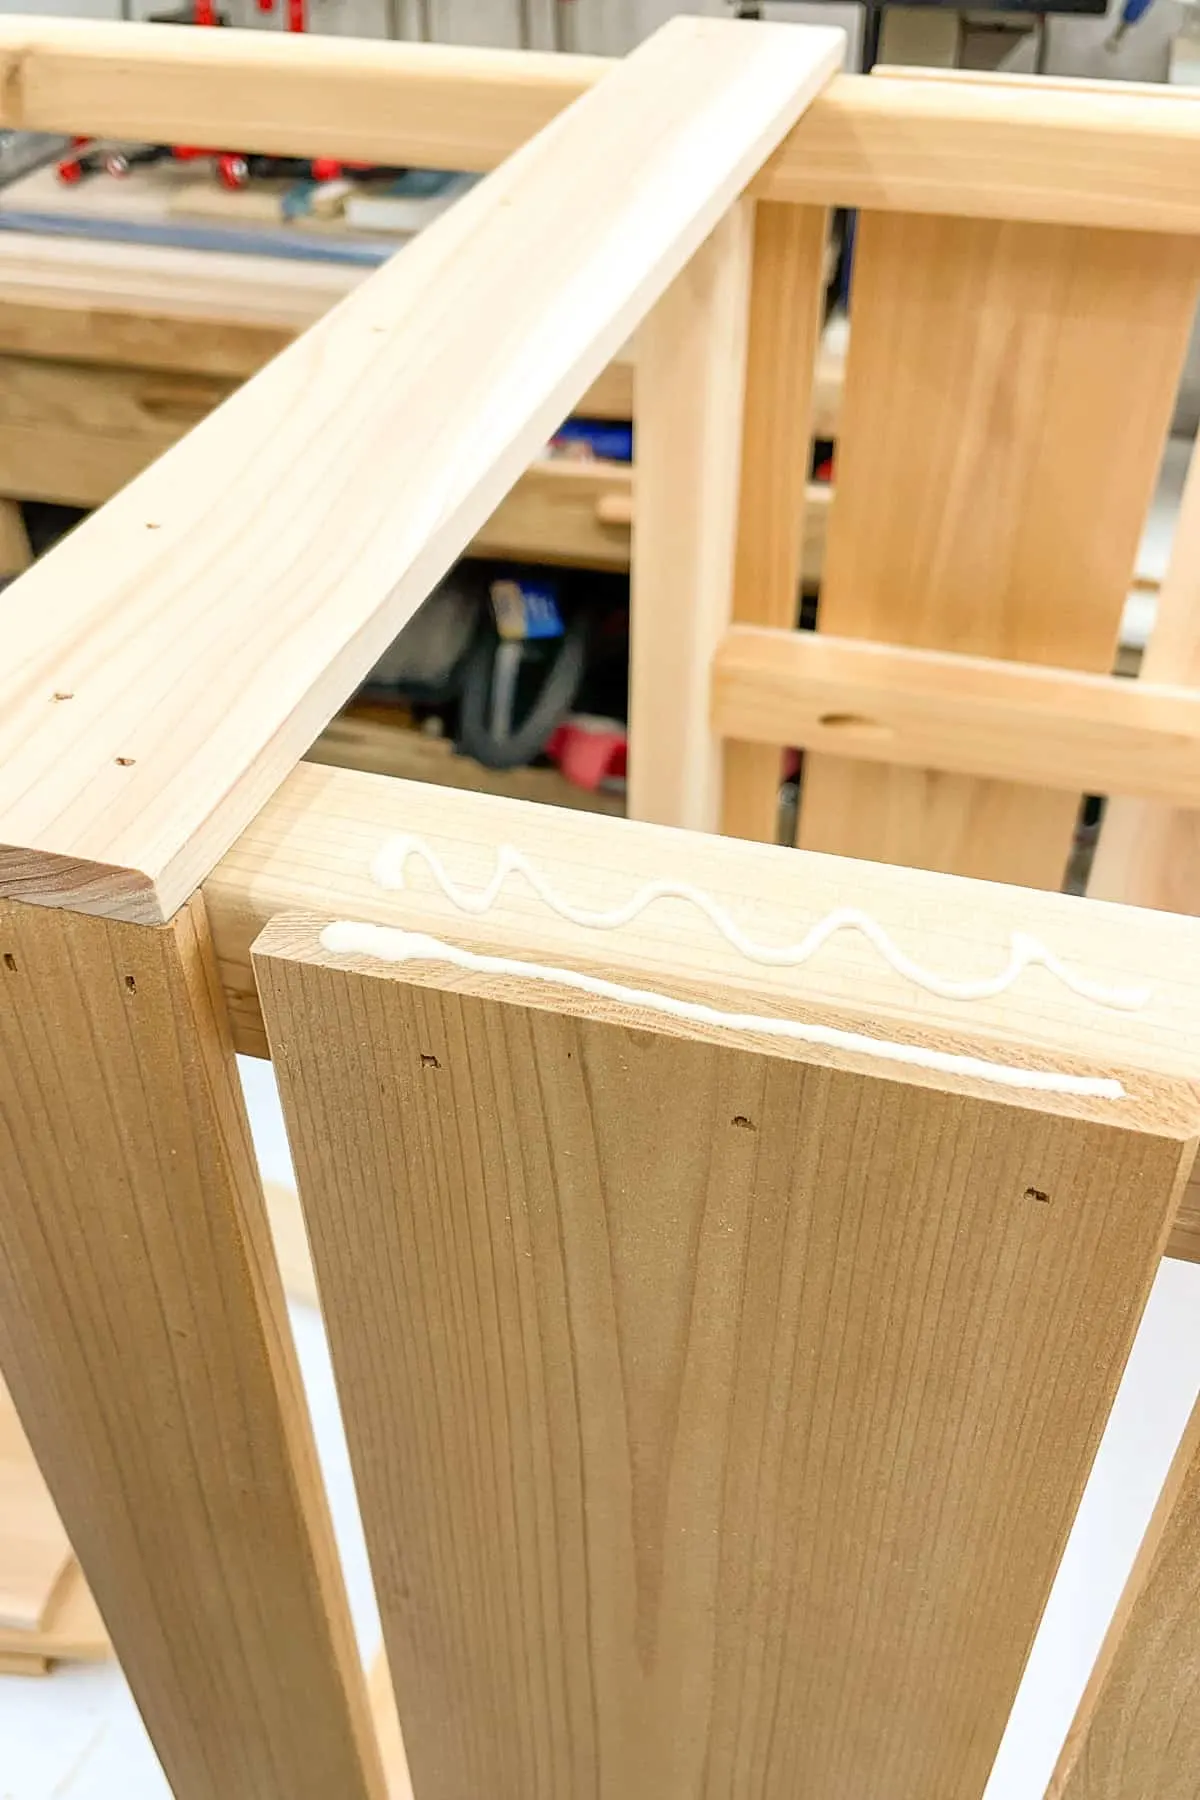 wood glue at joint between planter box slats and frame